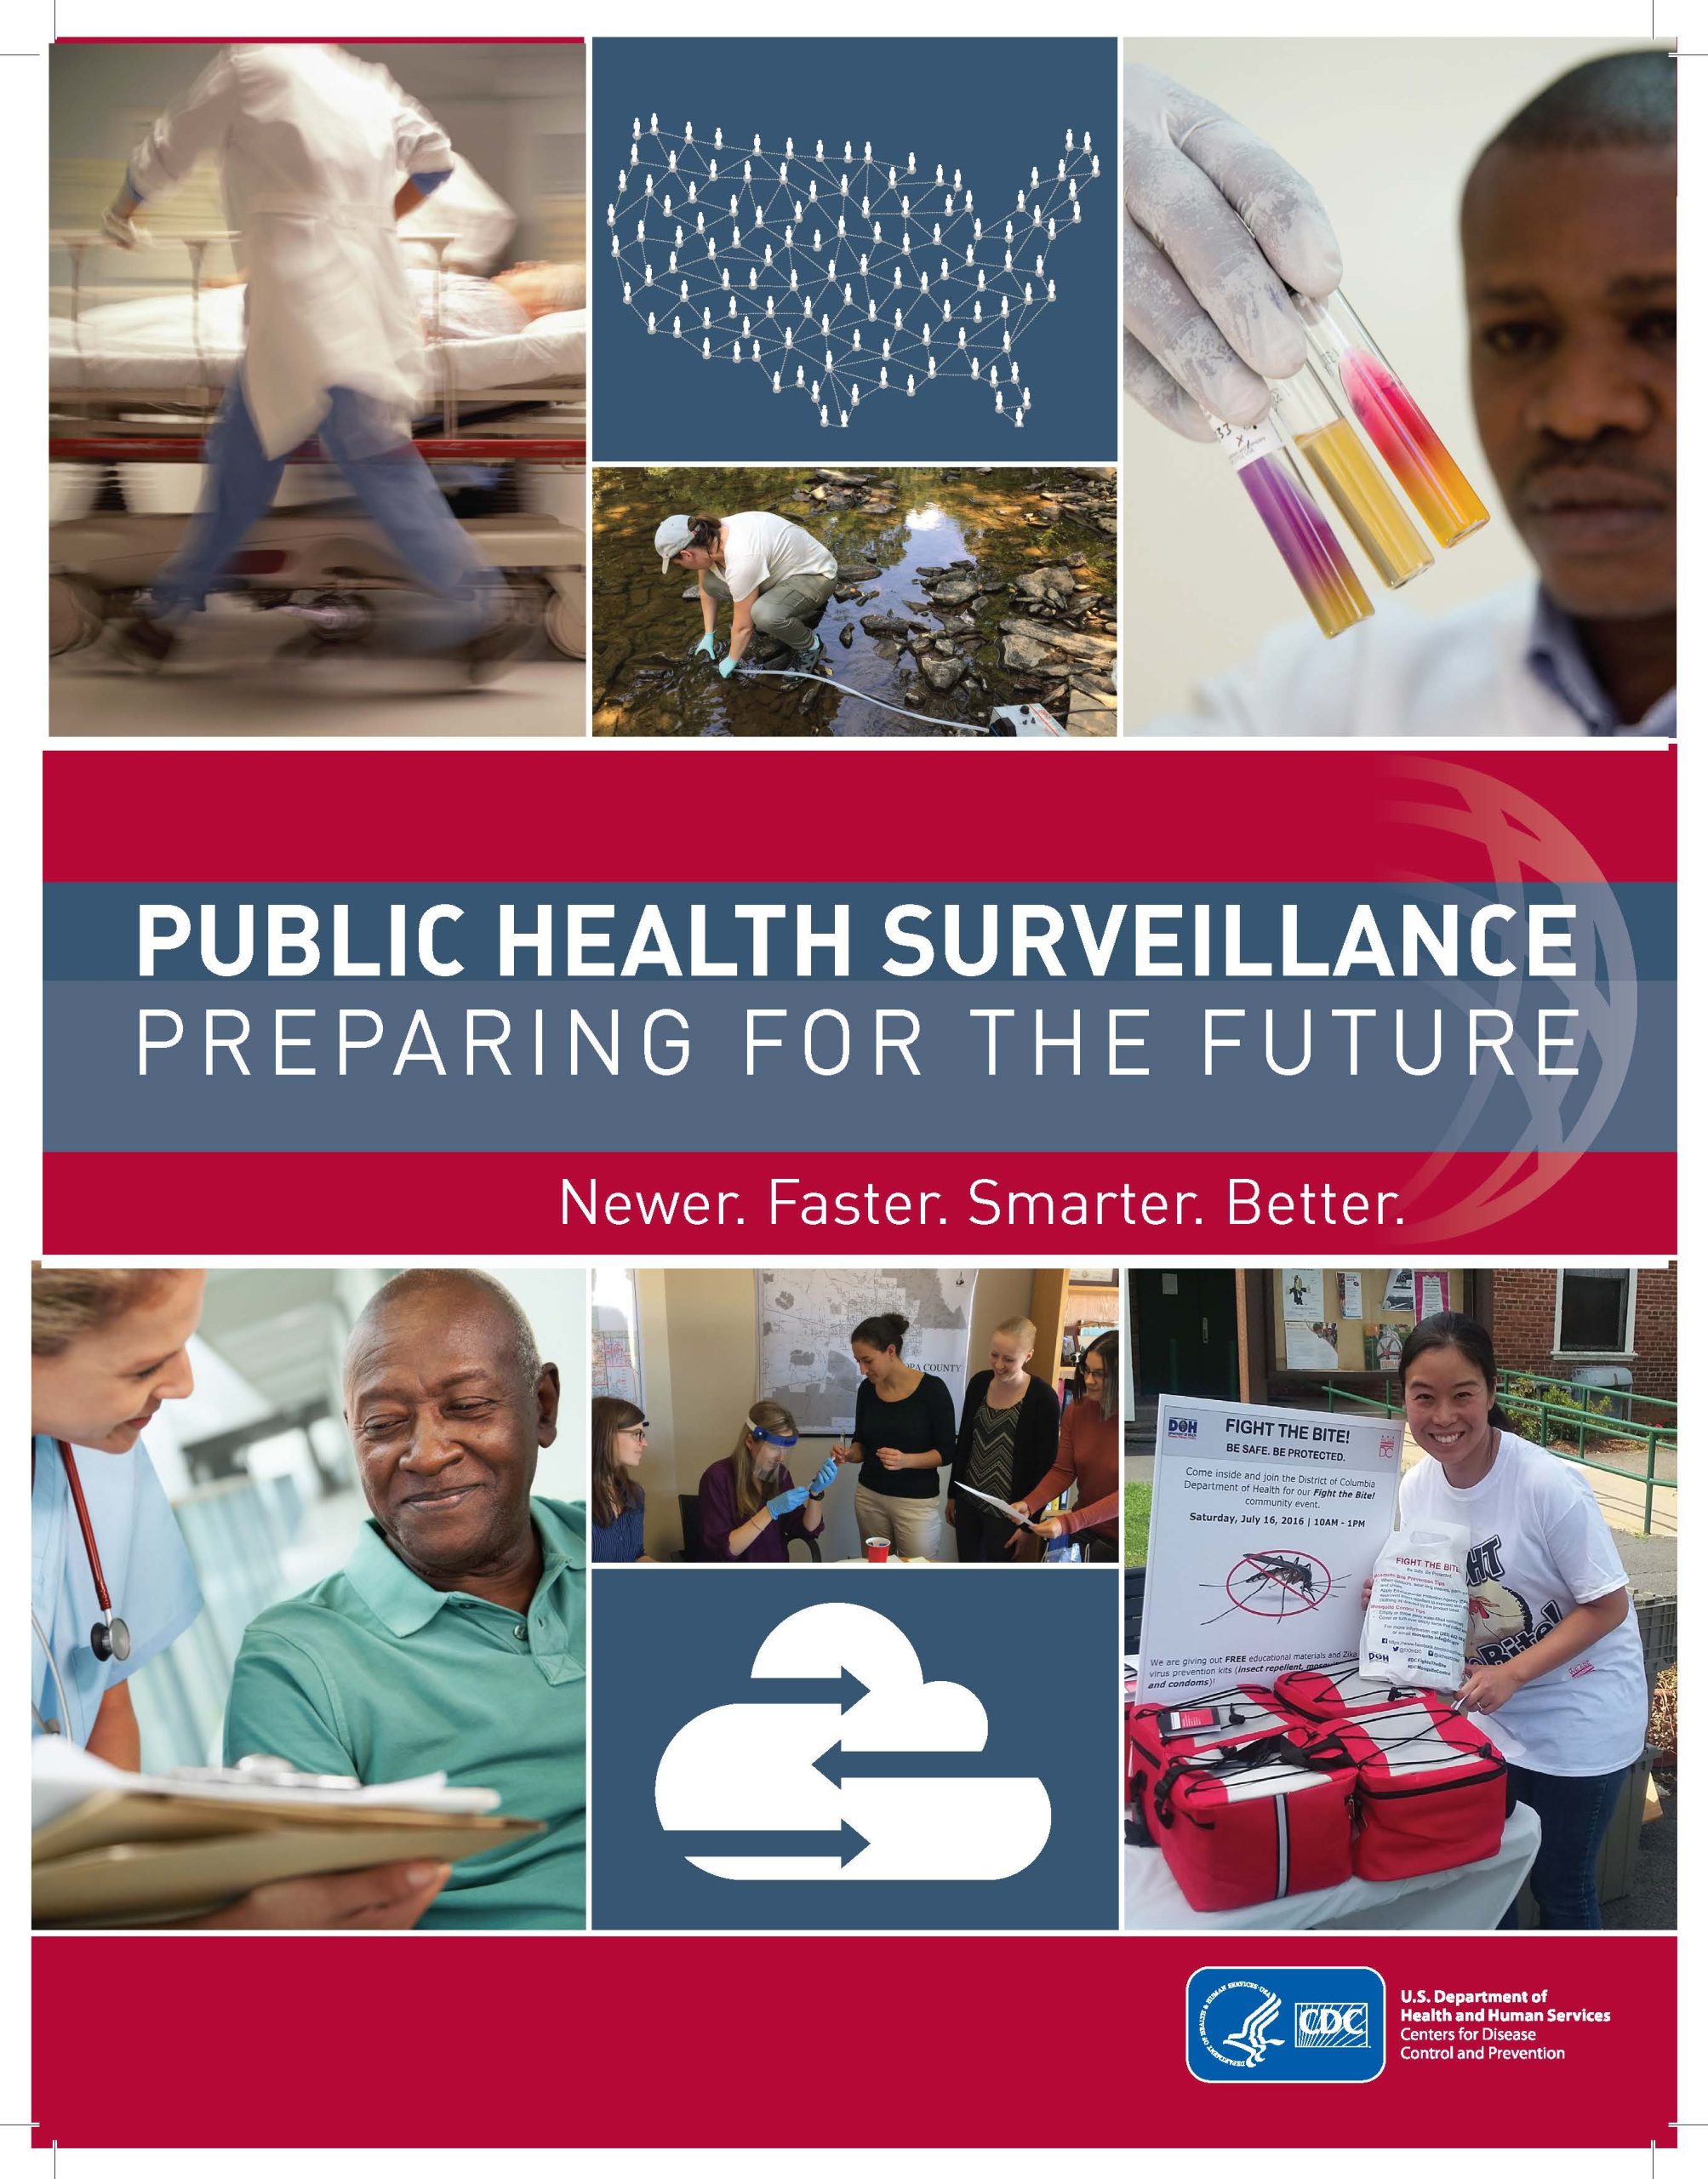 Public health surveillance preparing for the future: newer. faster. smarter. better. 2014-2018.